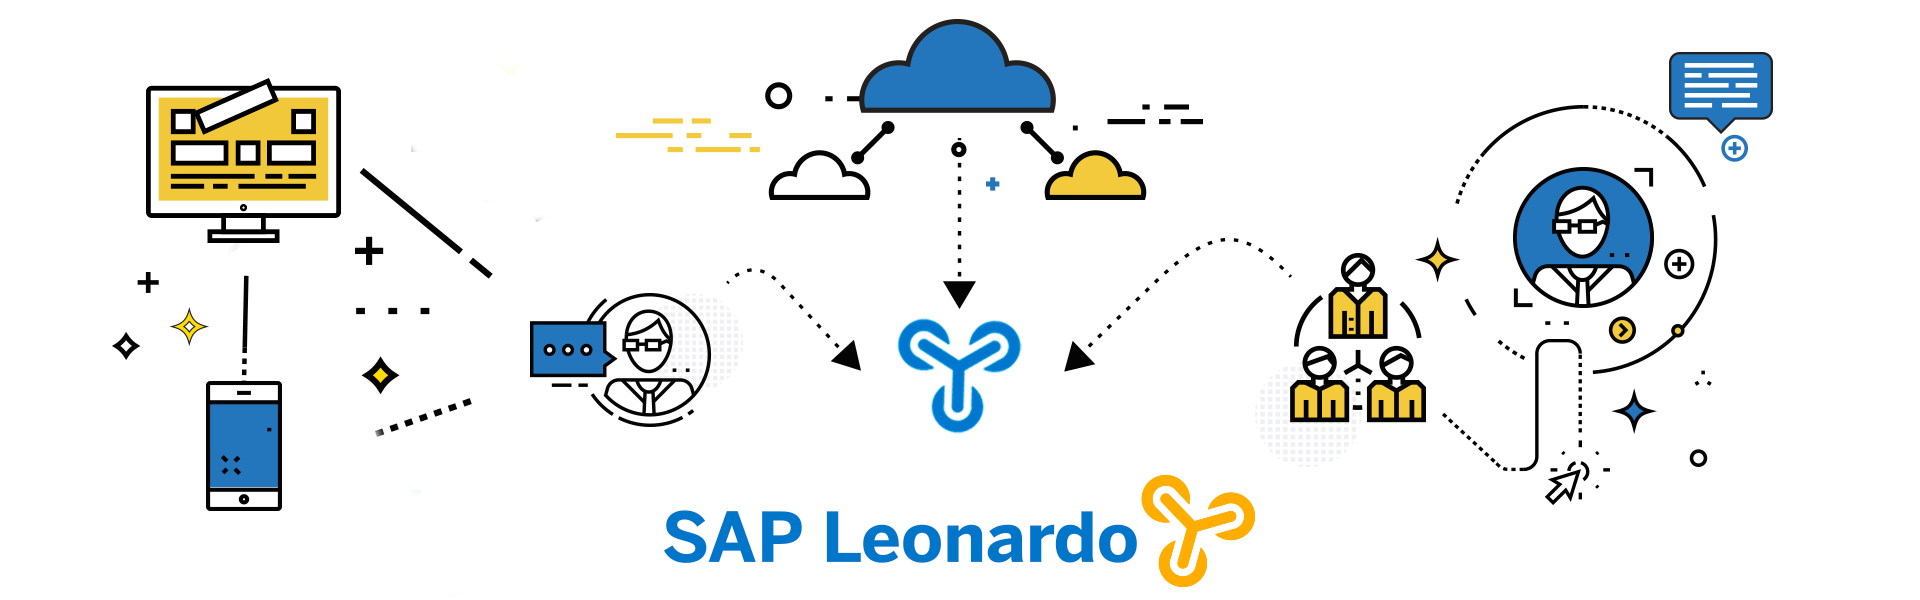 SAP Leonardo IoT ayuda a dar forma a la empresa inteligente